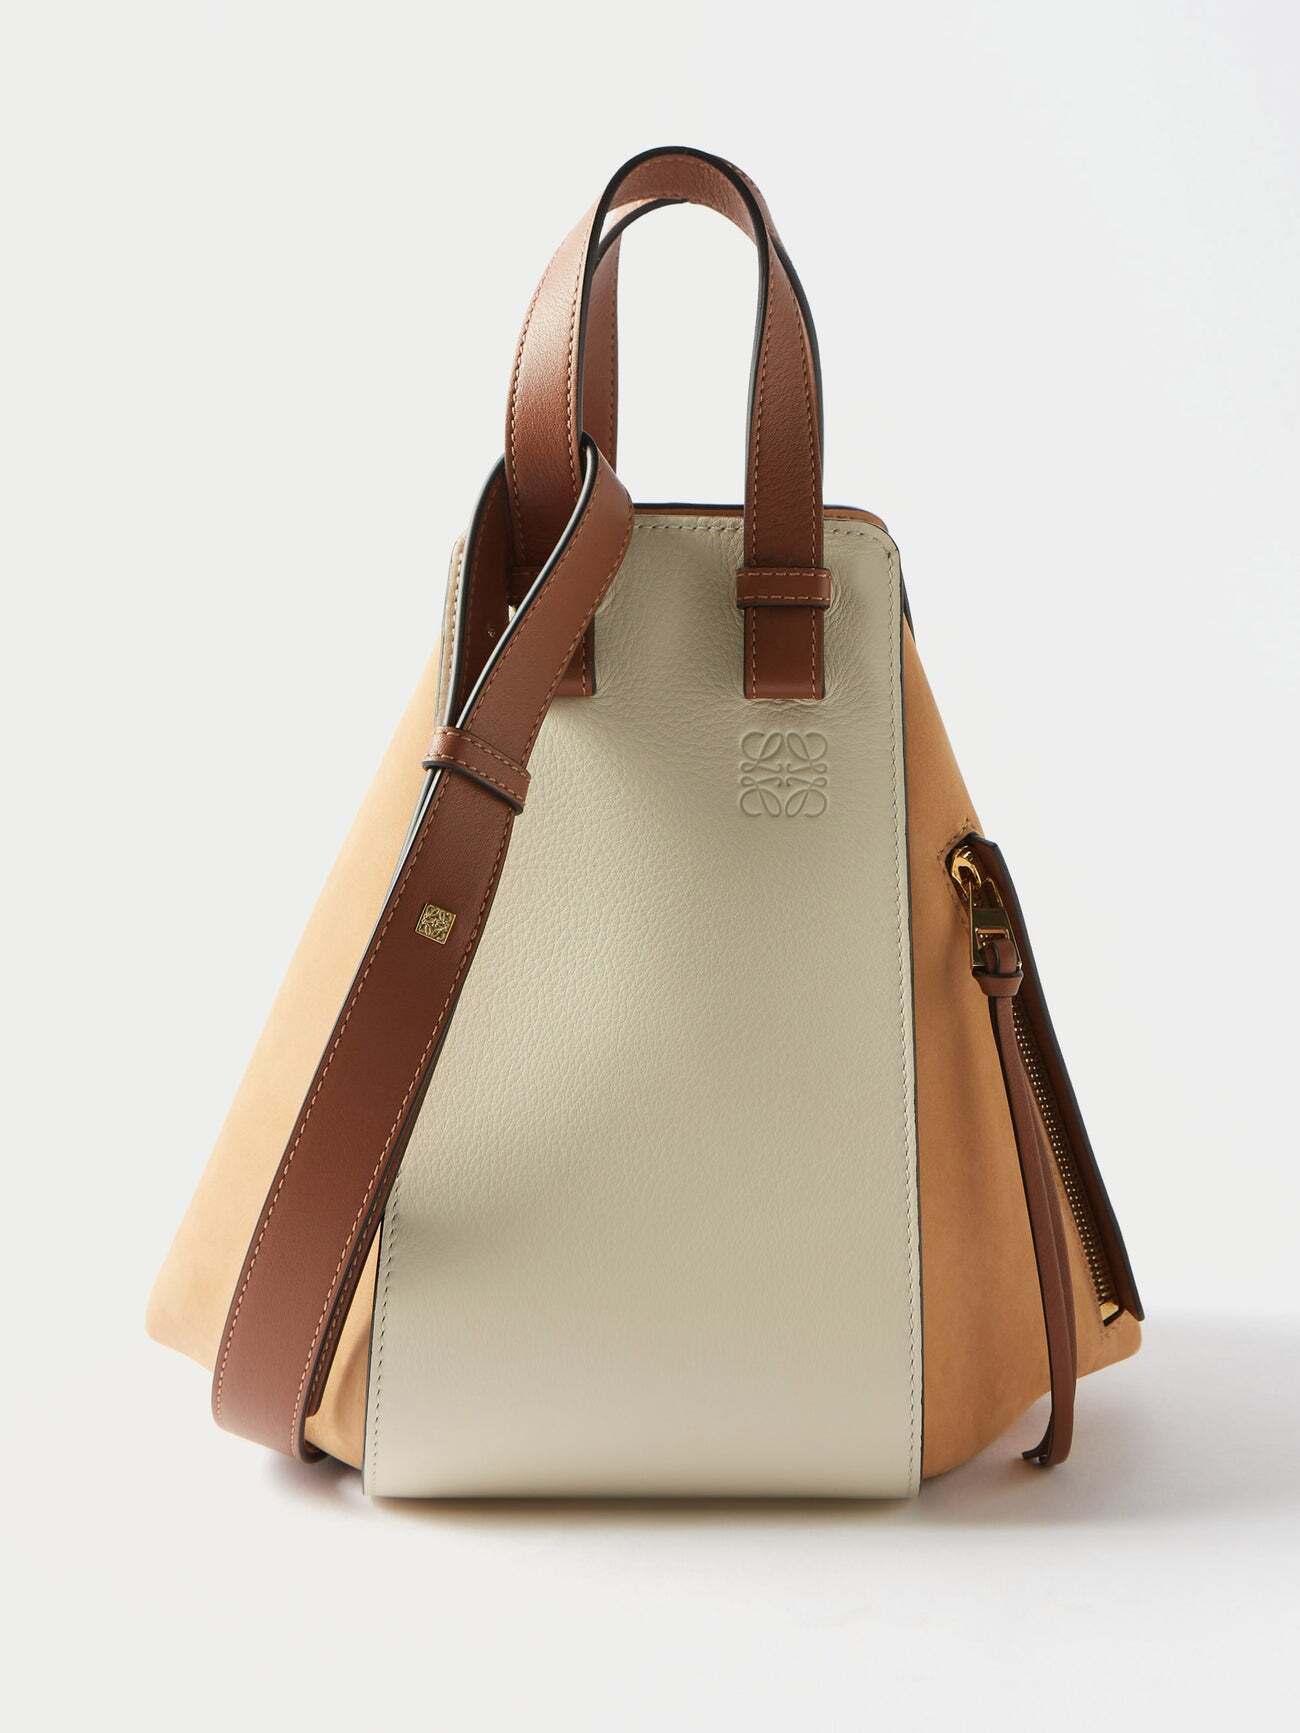 Loewe - Hammock Small Leather Bag - Womens - Beige Multi